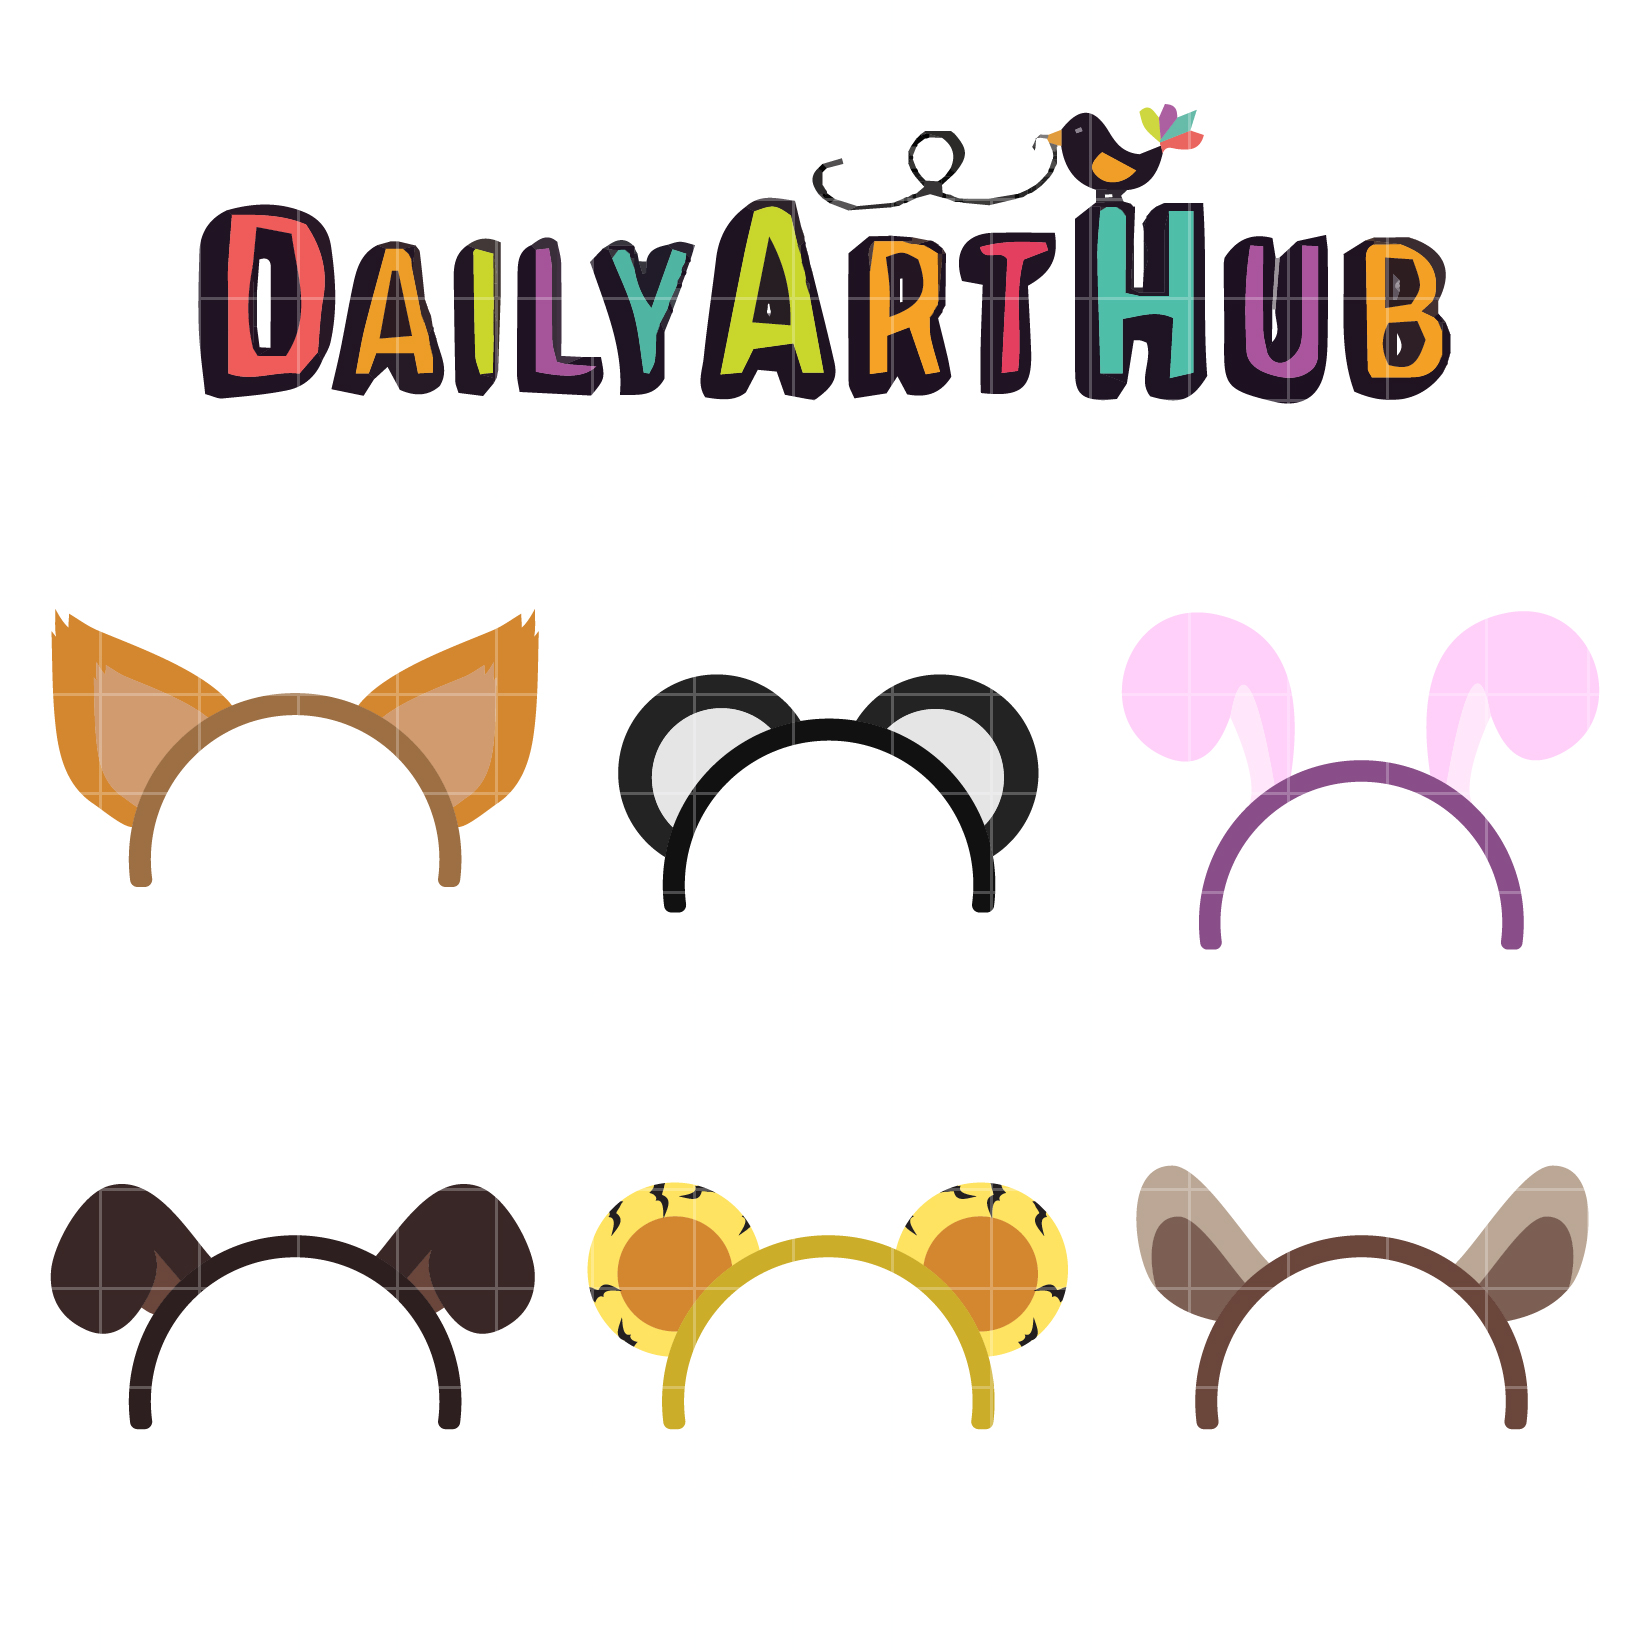 Animal Ears Clip Art Set – Daily Art Hub // Graphics, Alphabets & SVG